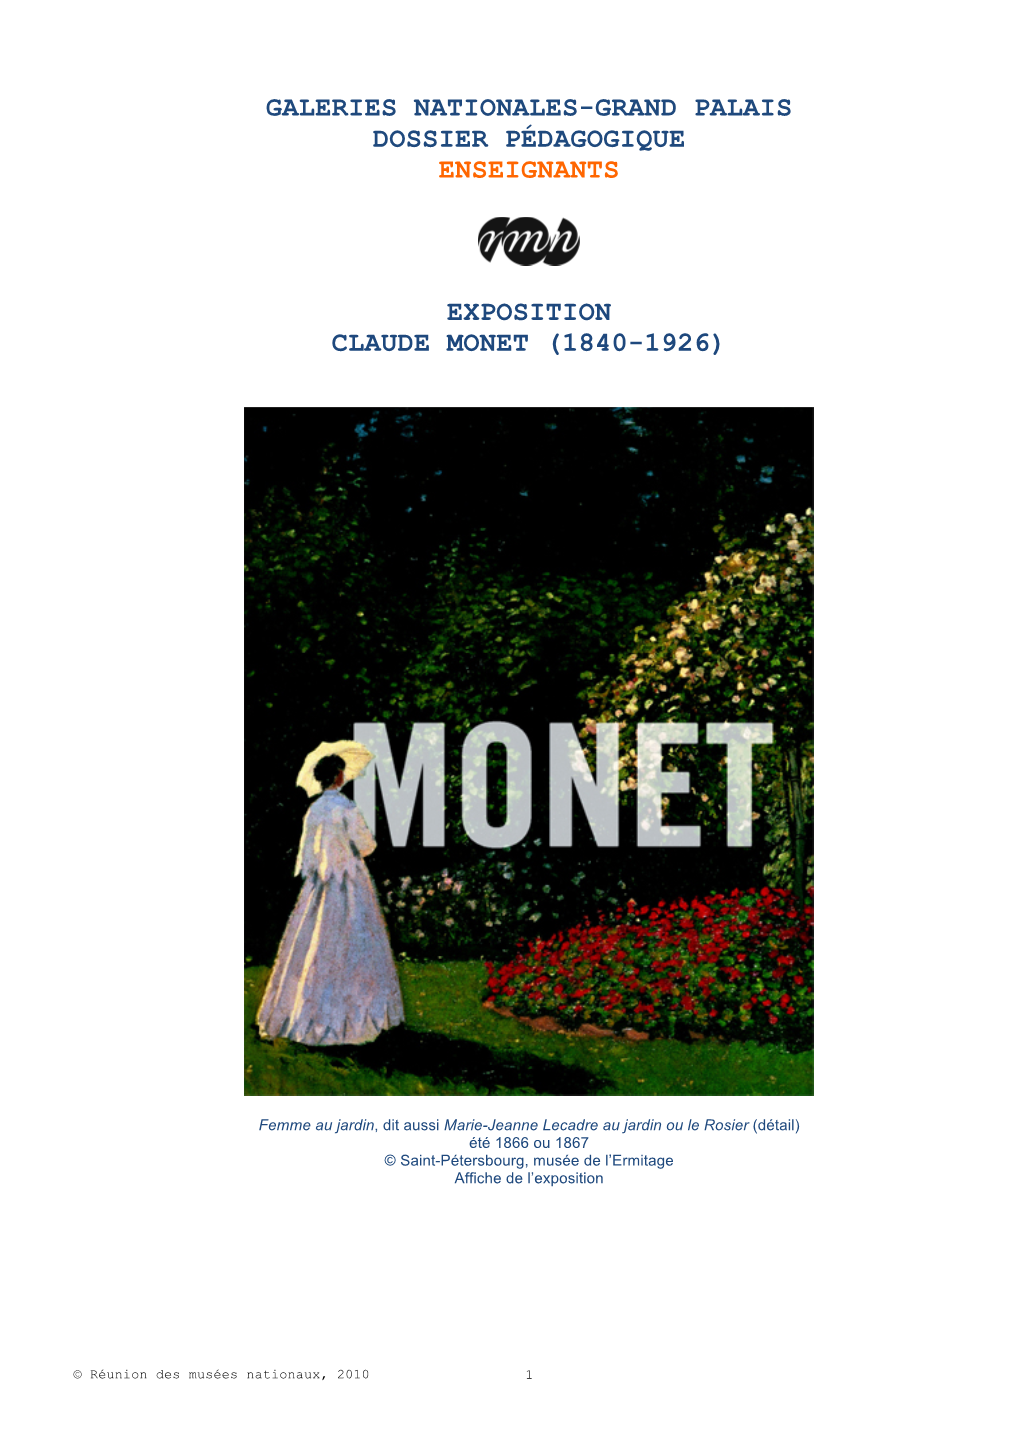 Exposition Claude Monet (1840-1926)